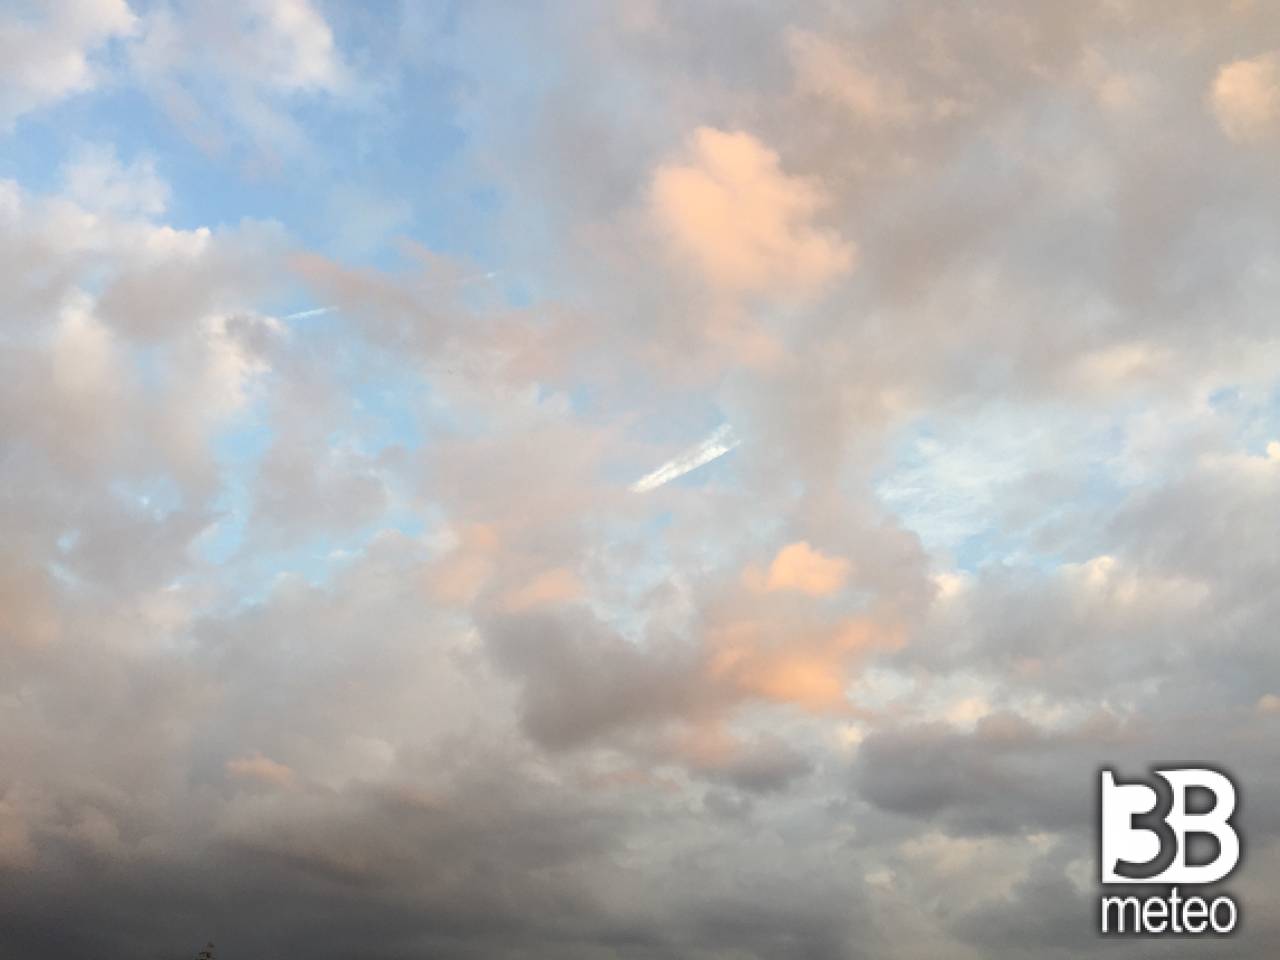 Meteo Nuoro: molte nubi giovedì, discreto venerdì, bel tempo sabato - 3bmeteo